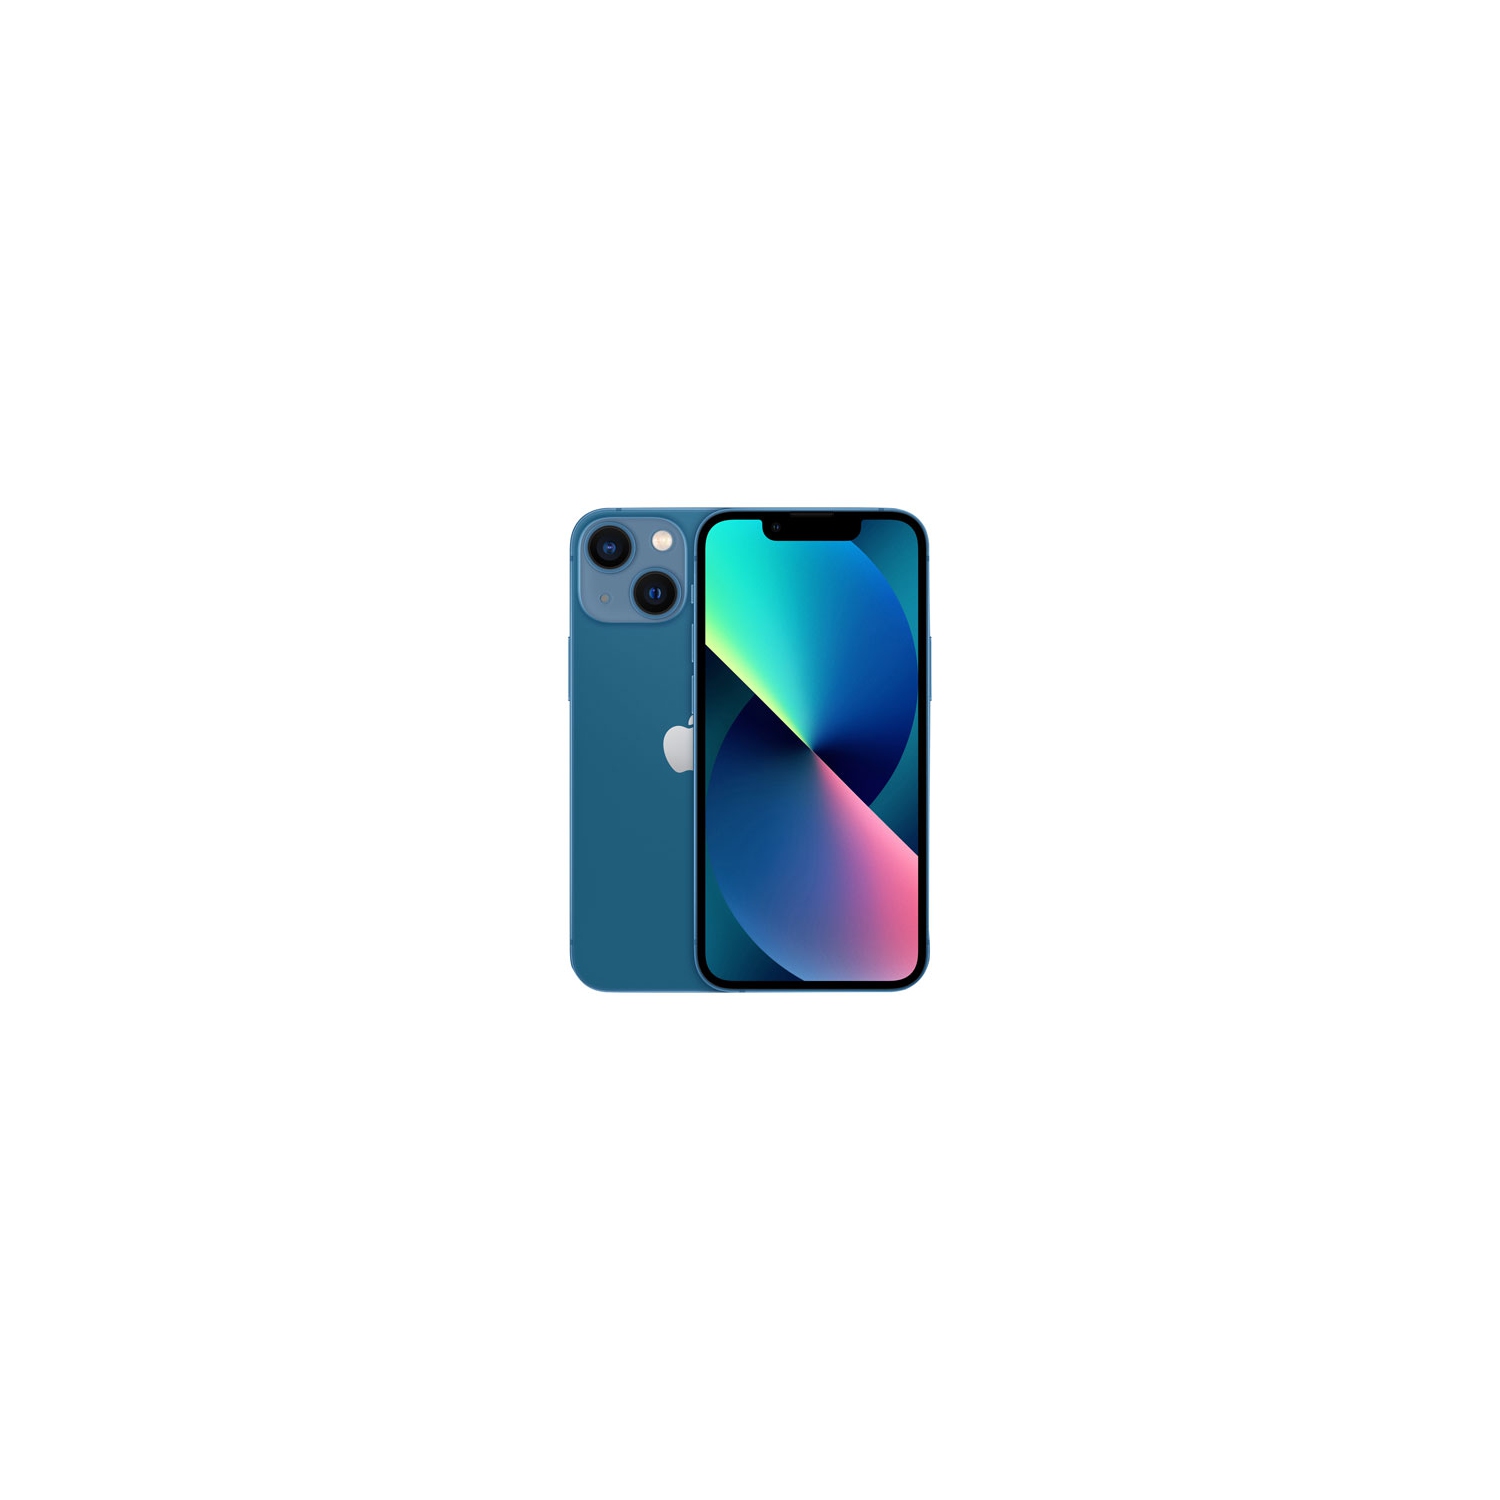 Apple iPhone 13 mini 256GB - Blue - Unlocked - Open Box